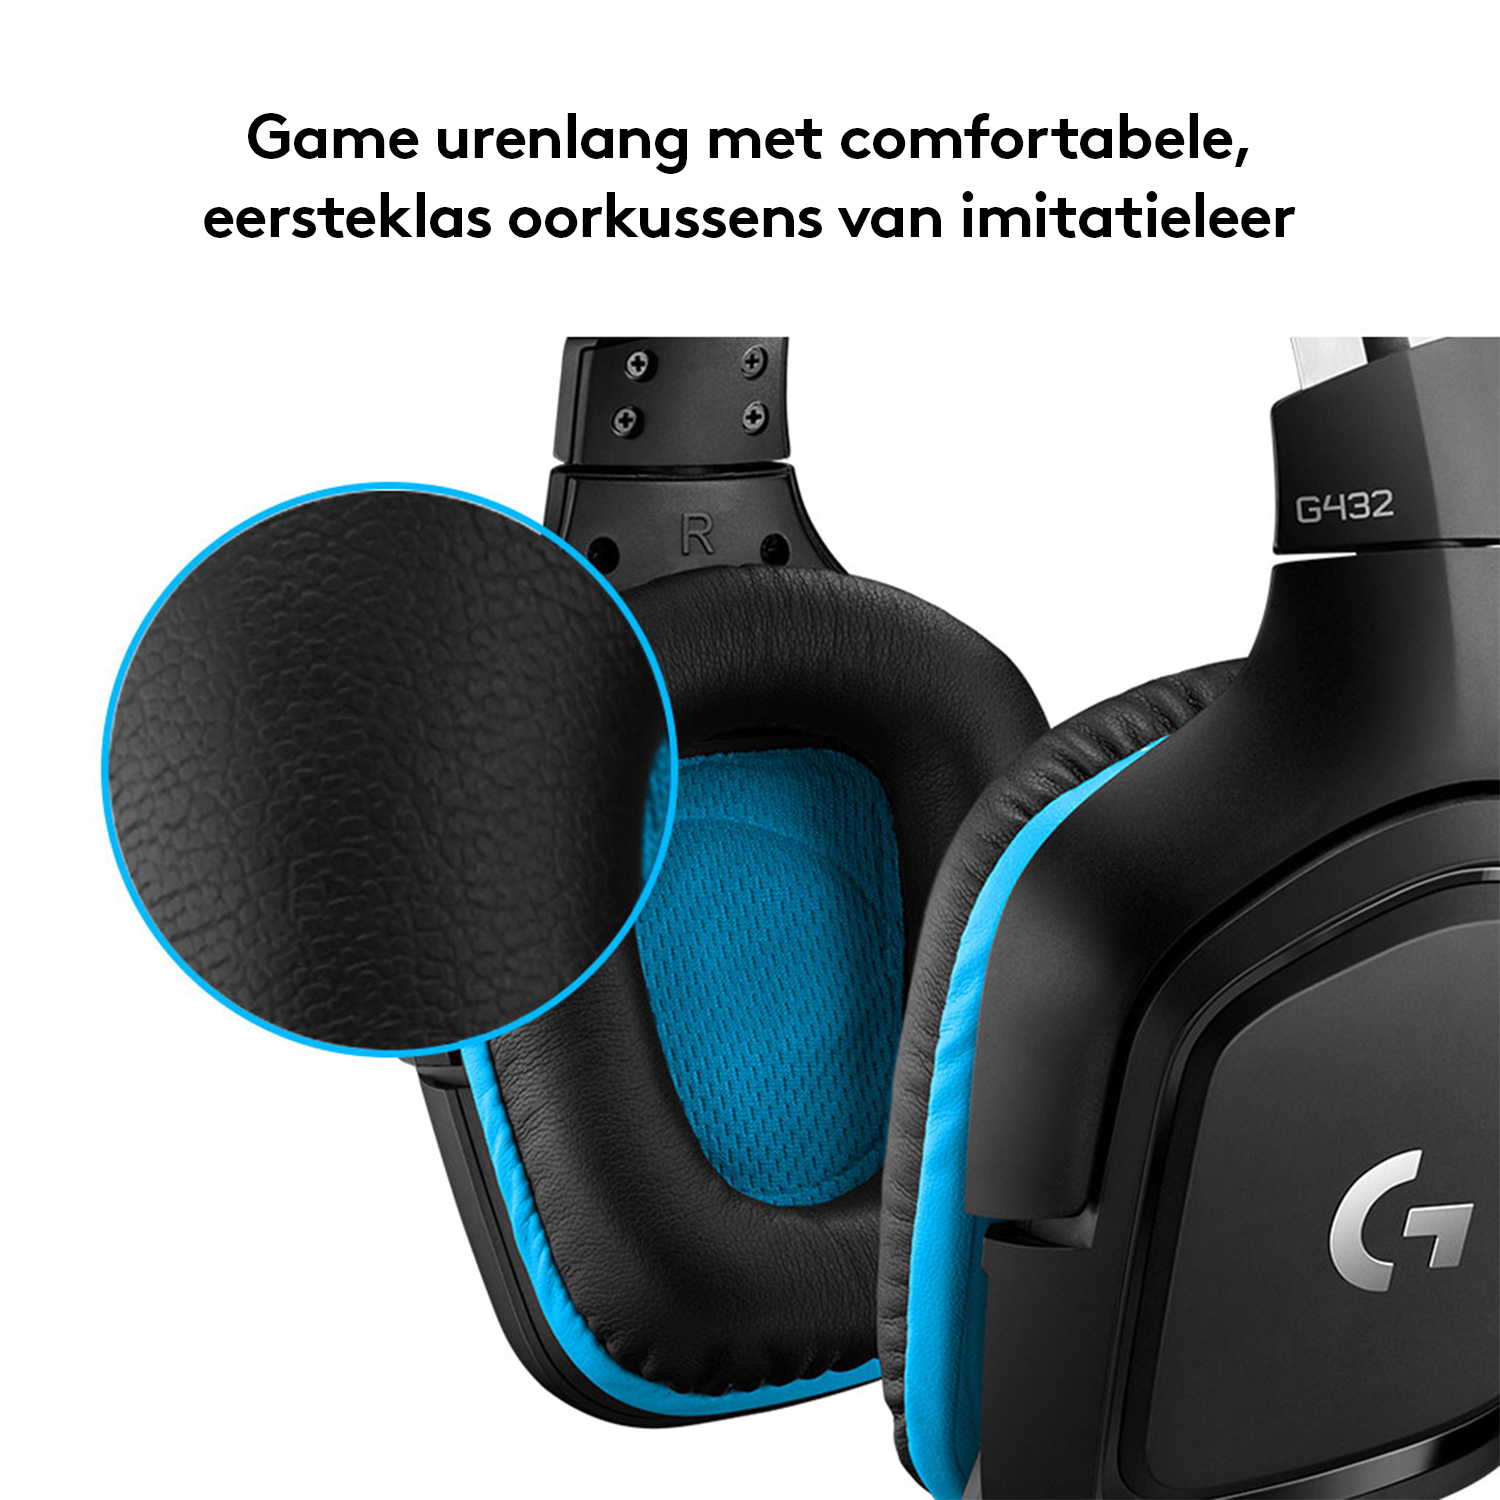 Logitech g432 gaming headset leatheratte